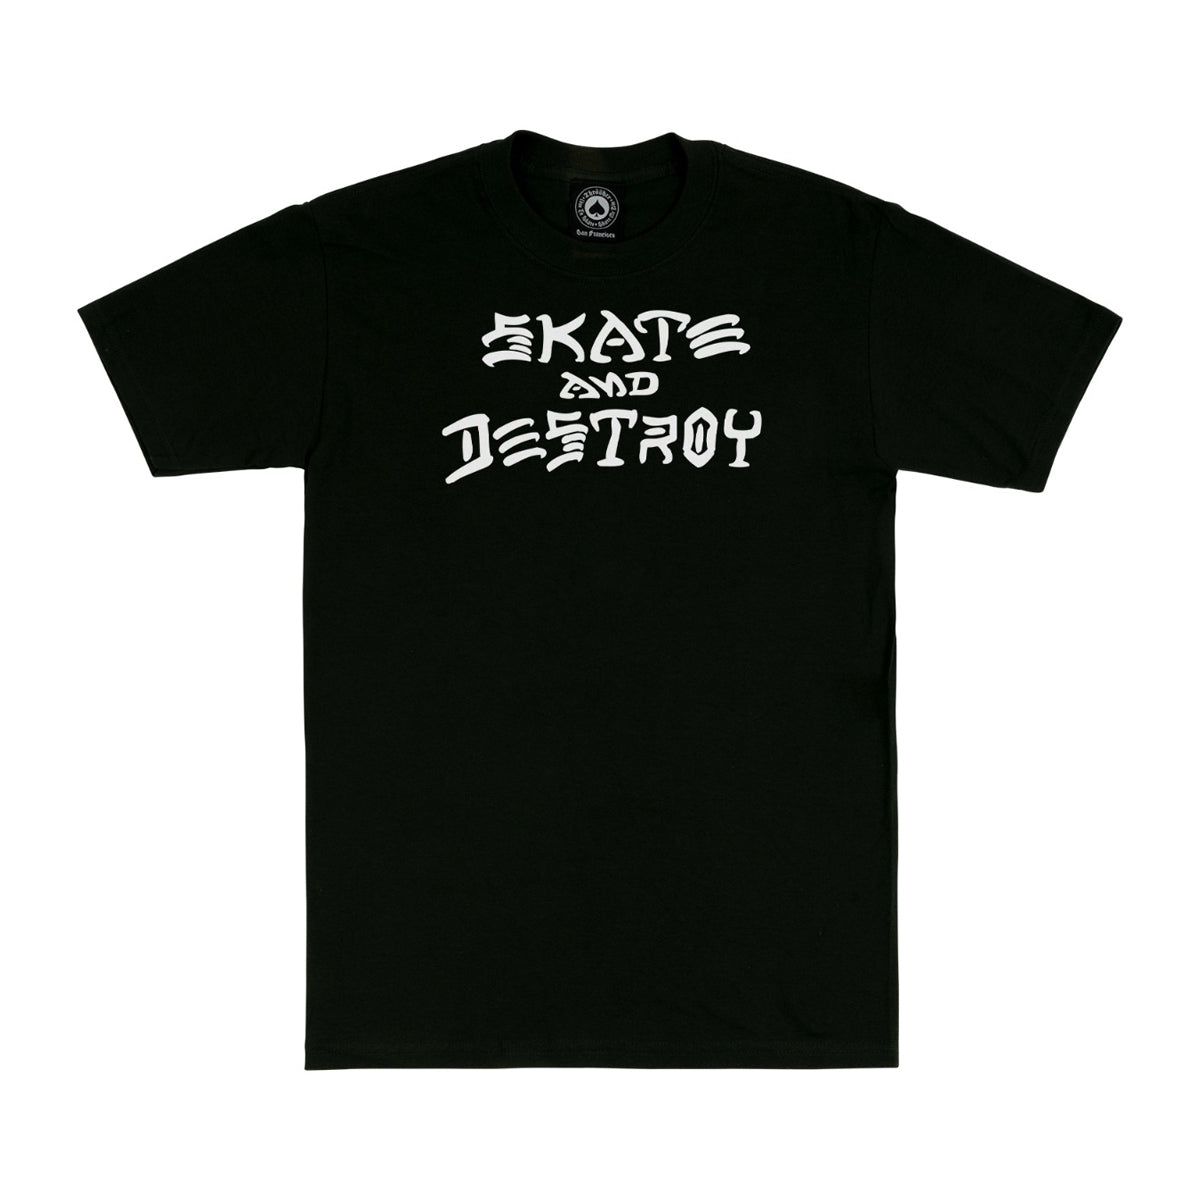 Thrasher Skate And Destroy Short Sleeve T-Shirt (Black) - Apple Valley Emporium